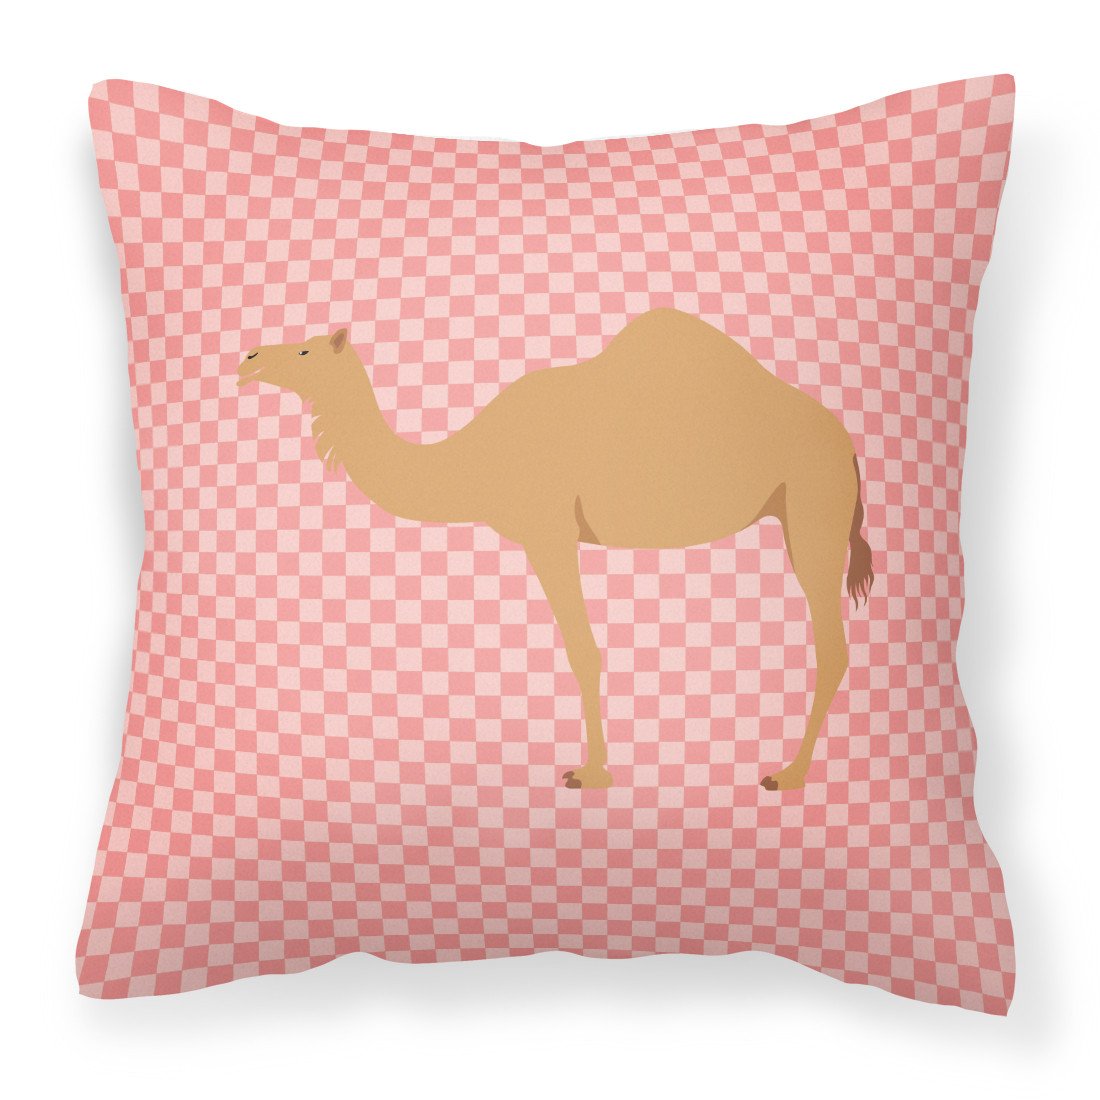 Arabian Camel Dromedary Pink Check Fabric Decorative Pillow BB7817PW1818 by Caroline's Treasures